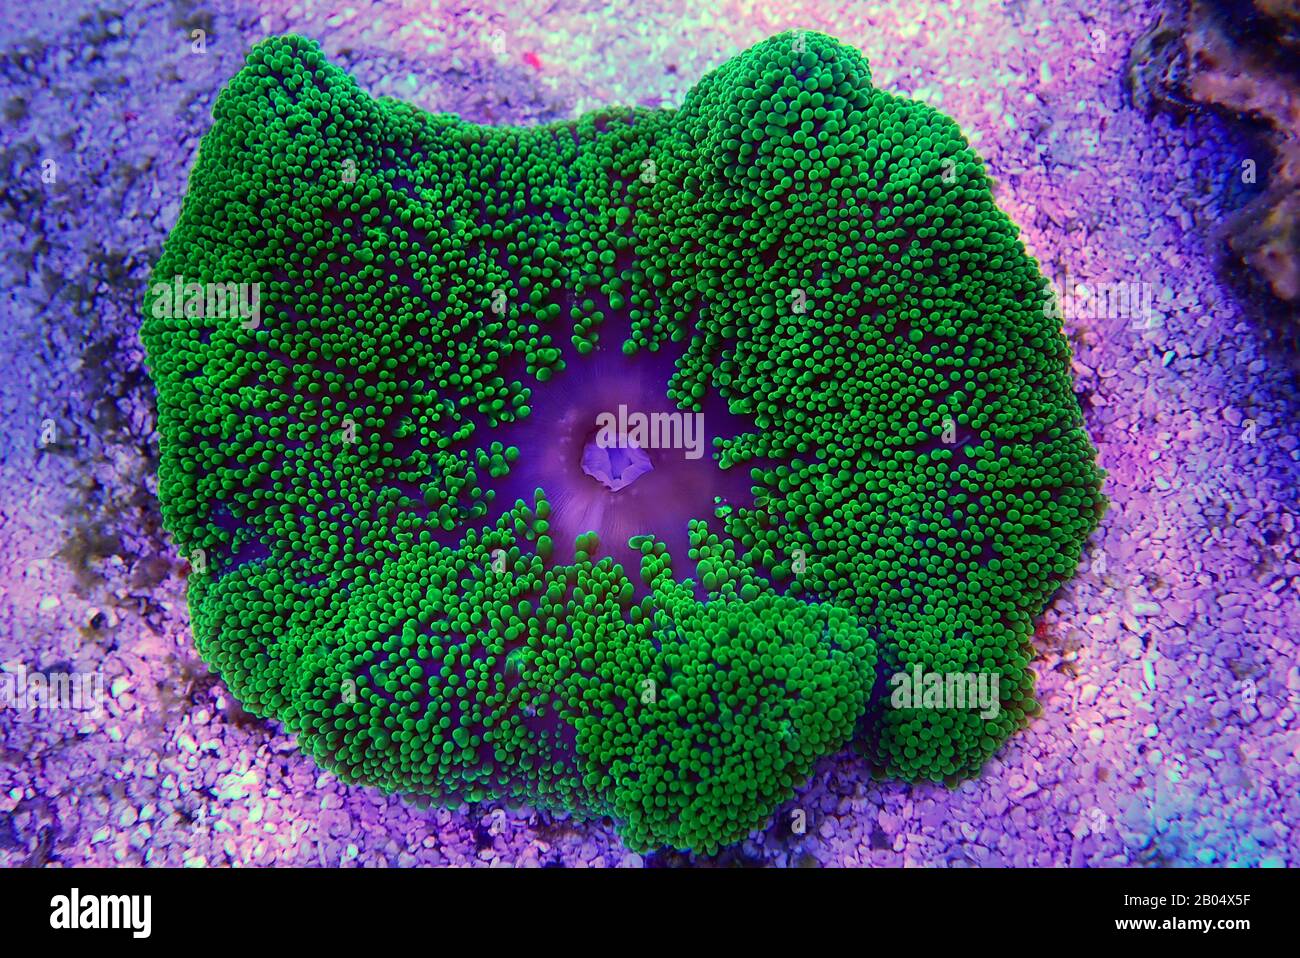 Vert Carpet anemone - Stichodactyla haddoni Banque D'Images